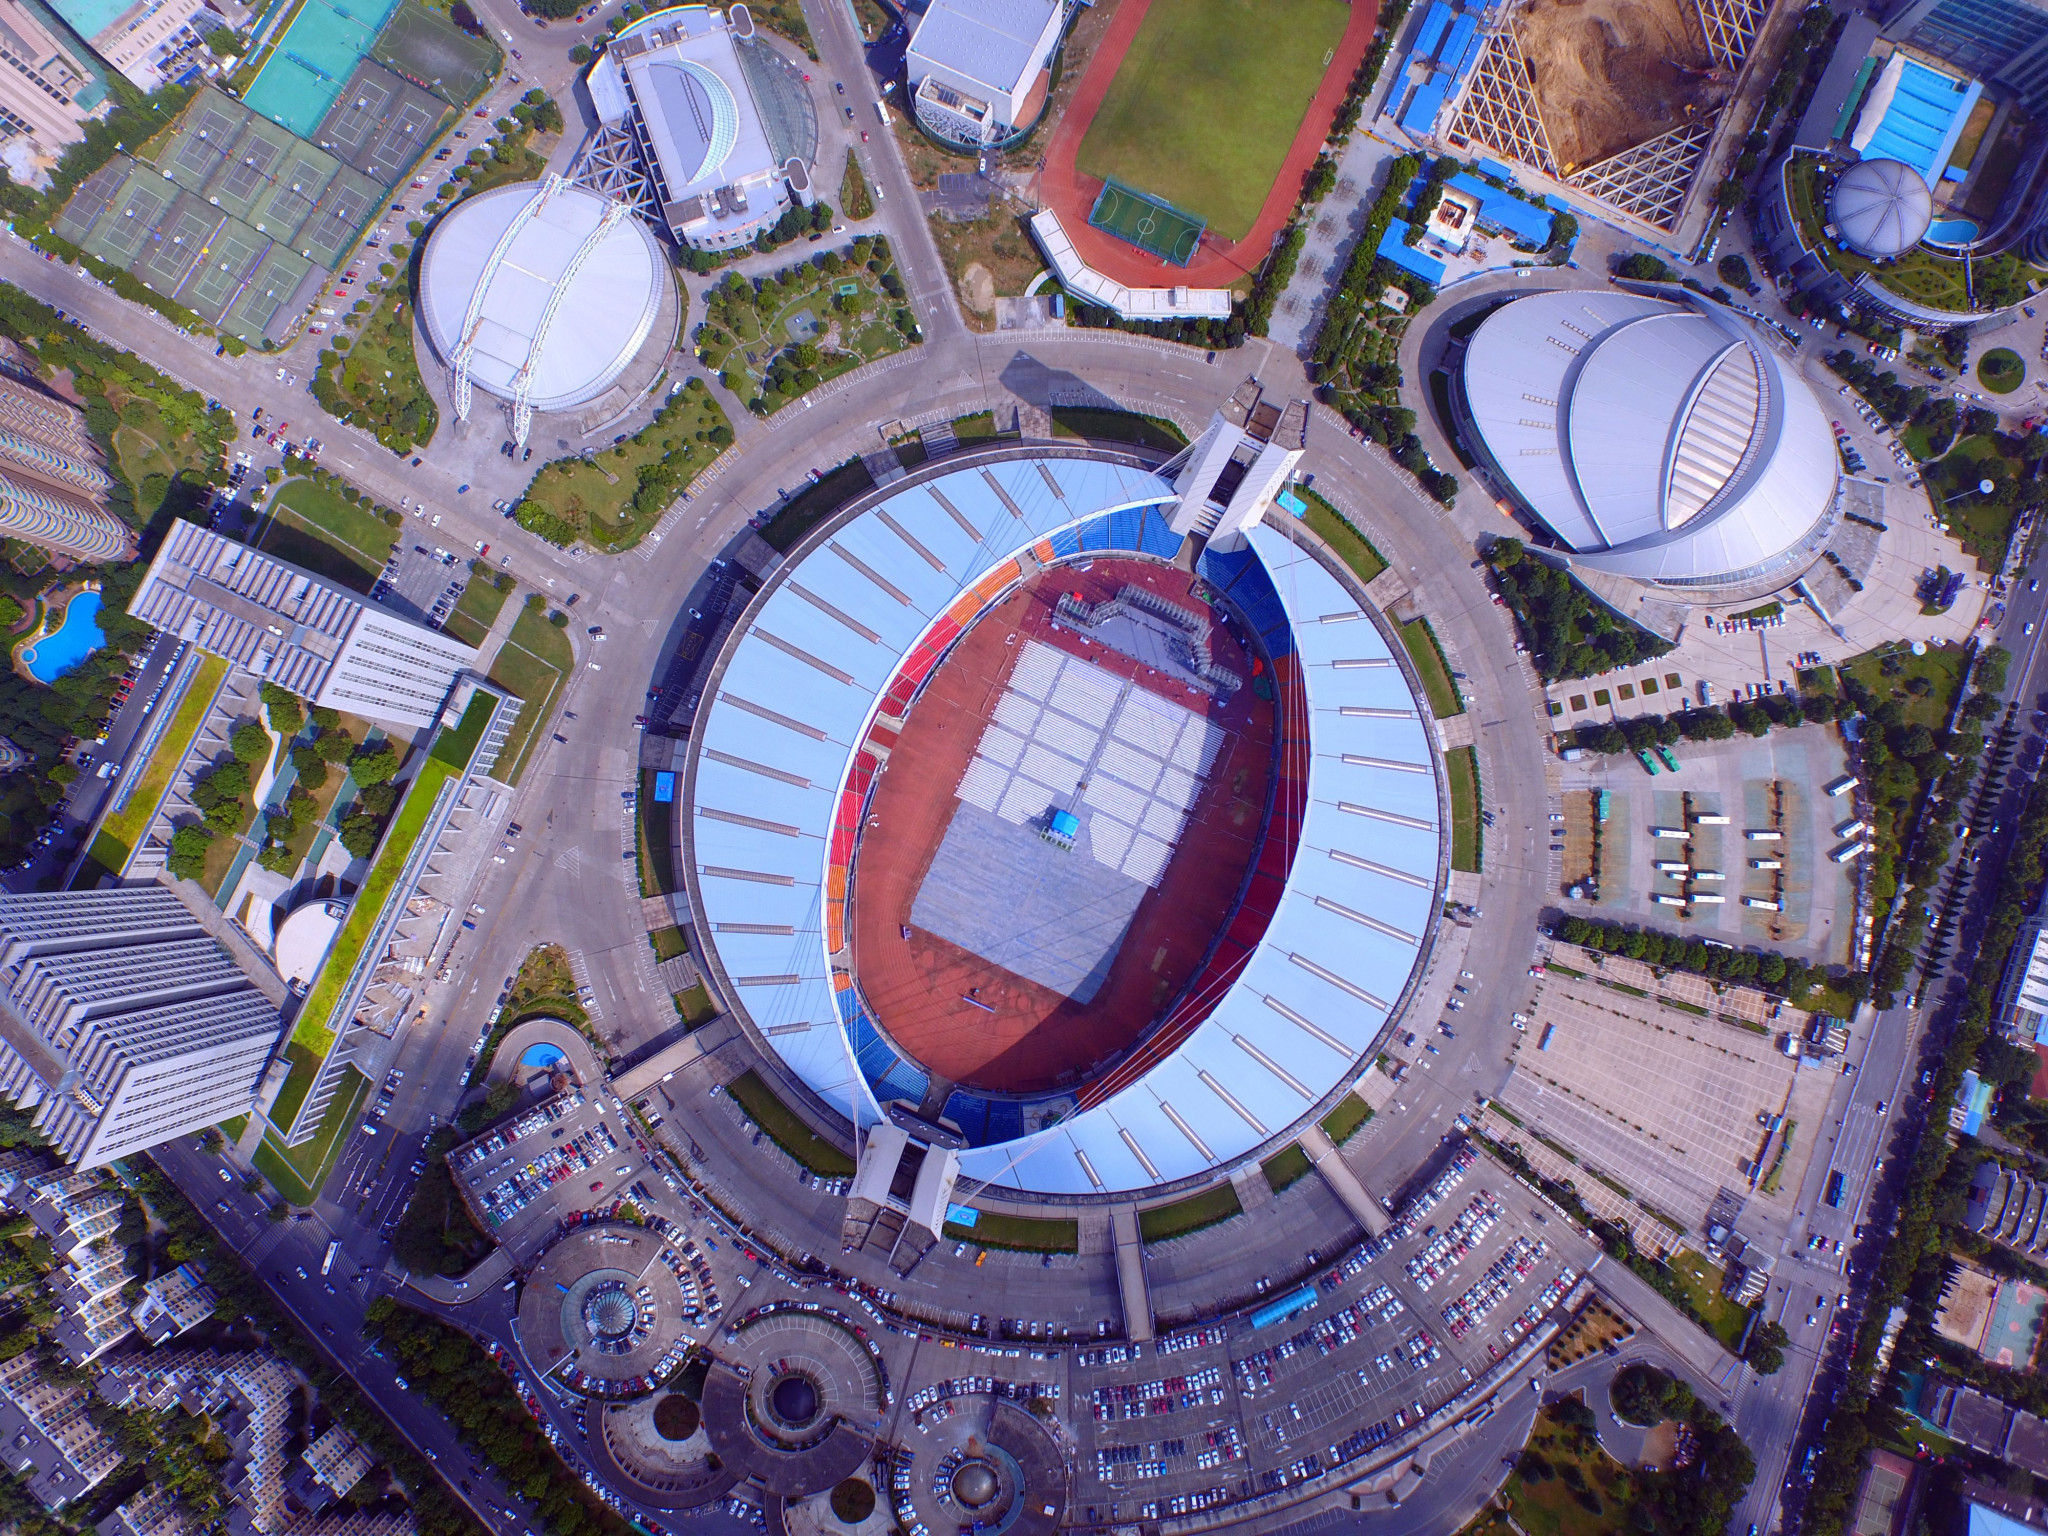 Yellow Dragon sports complex ready for Hangzhou 2022 Asian Games, Bureau claims